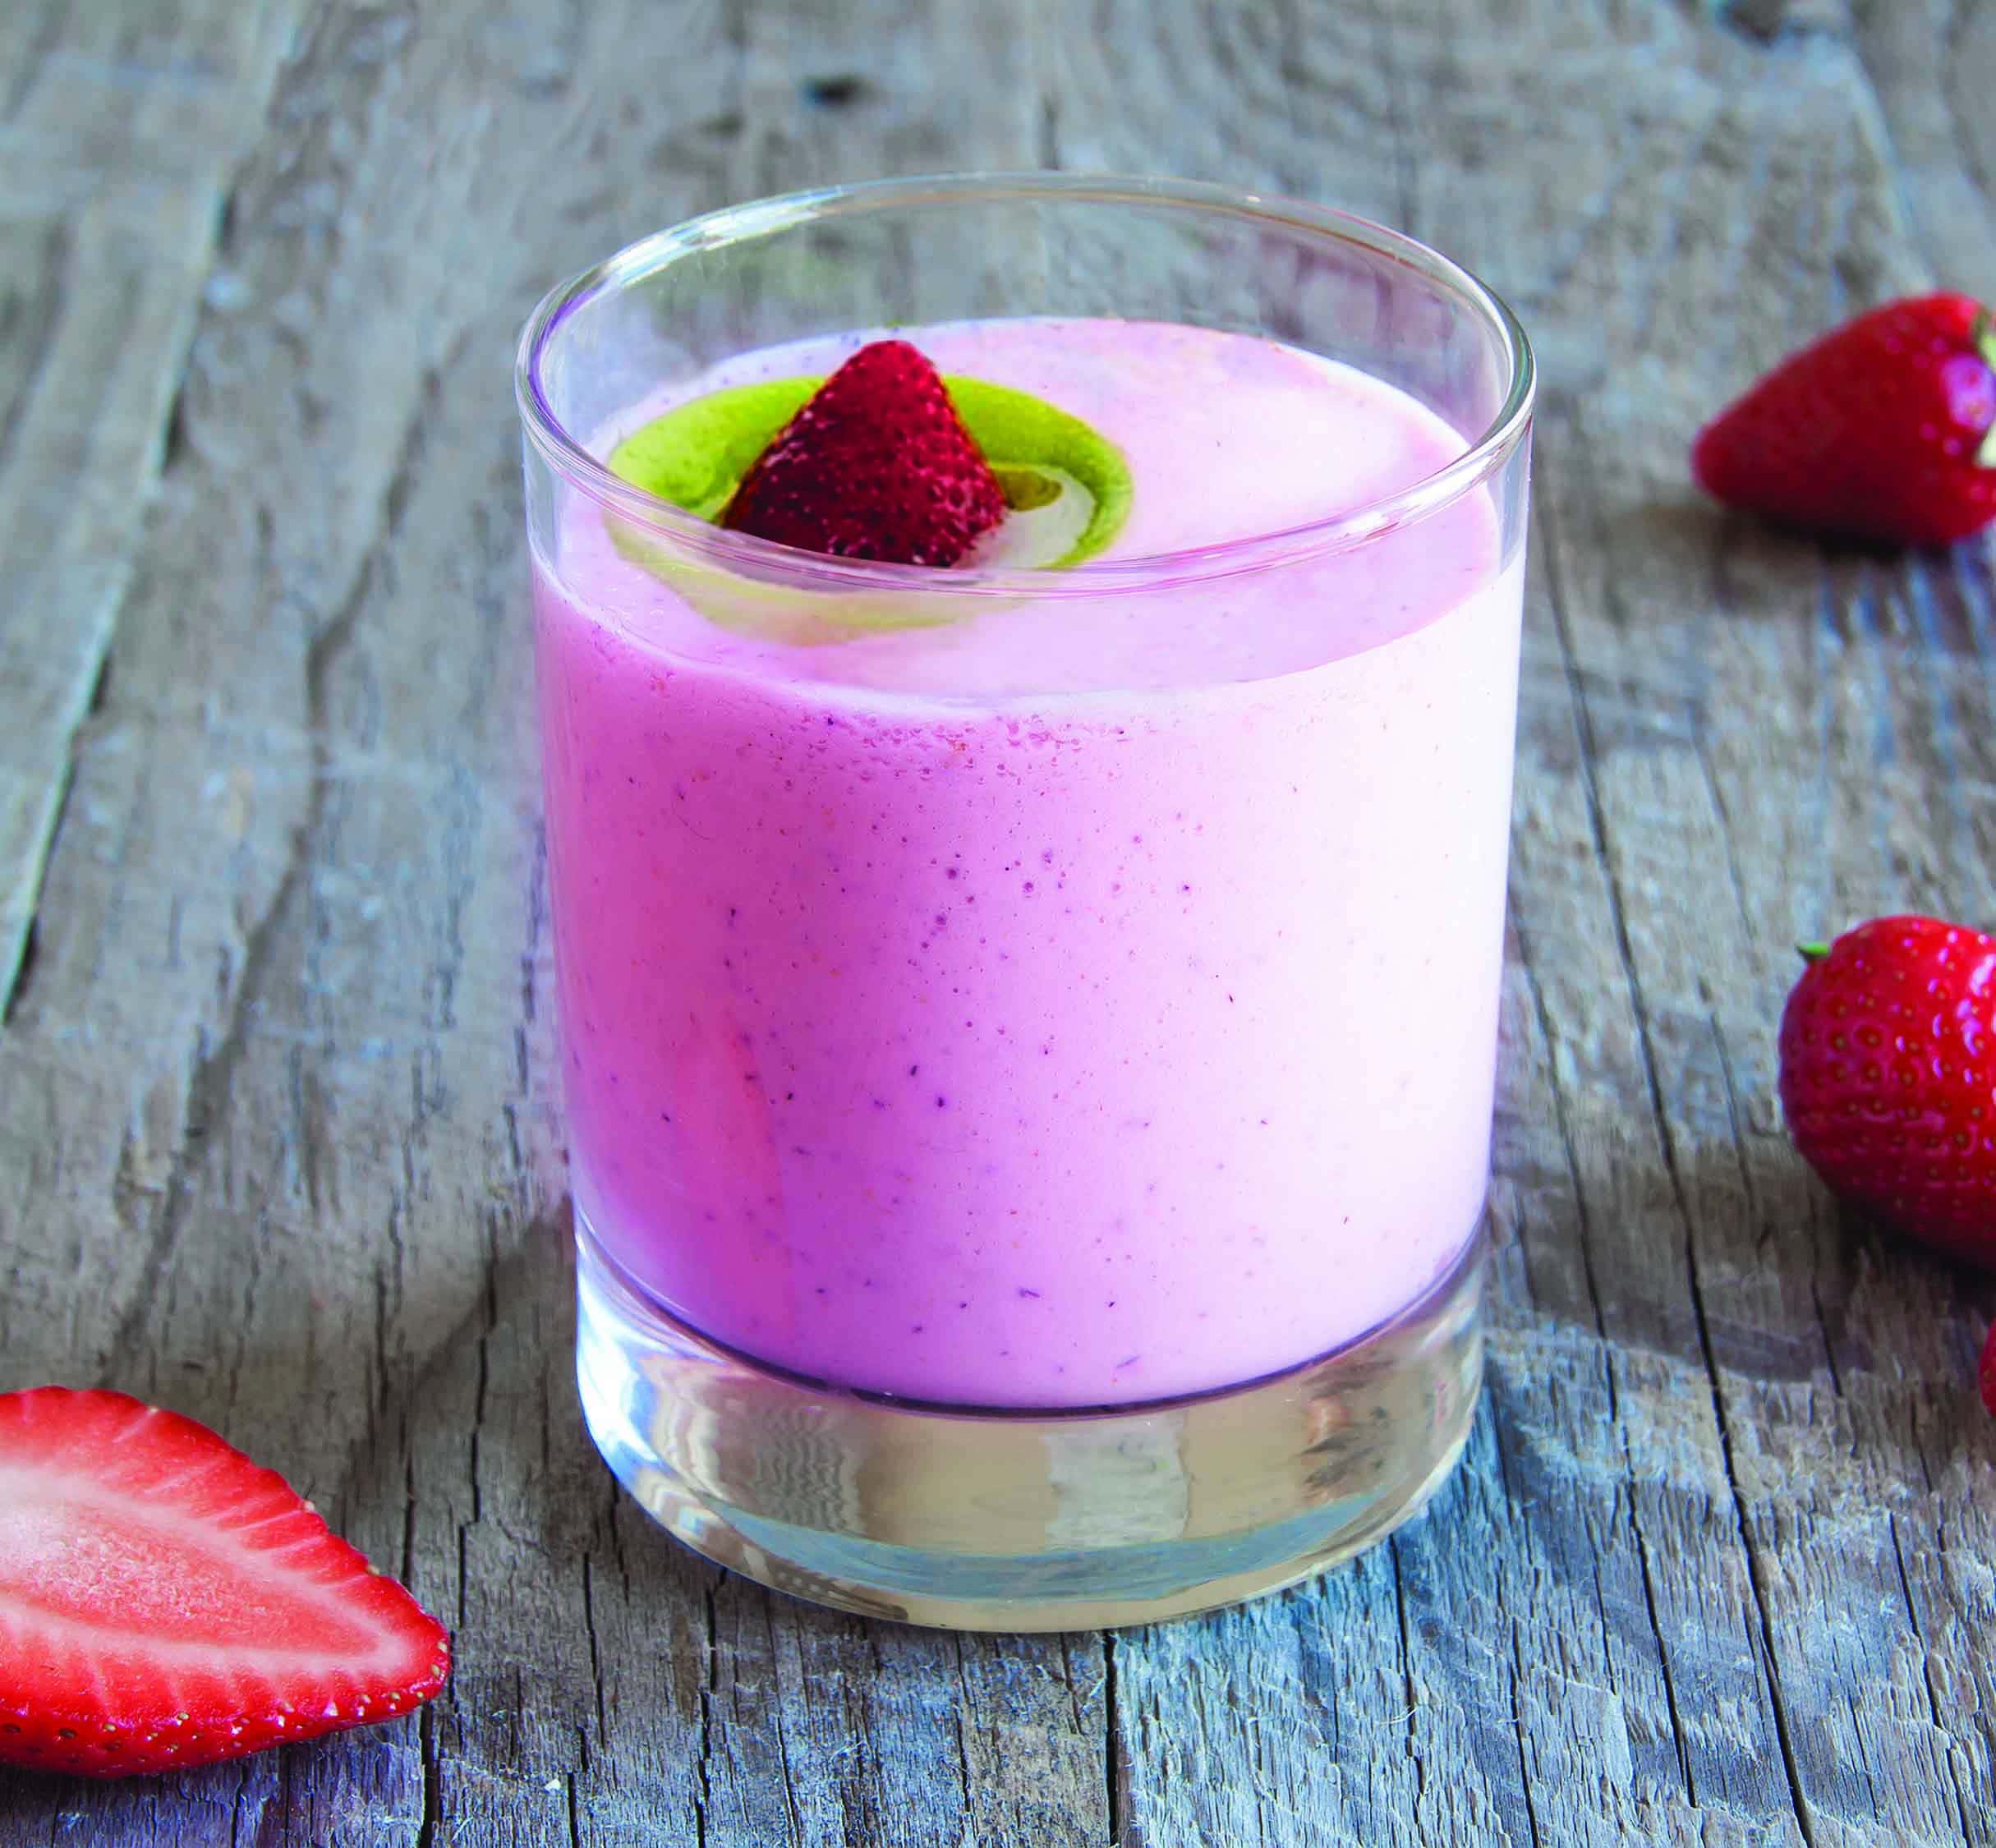 pink drink in rocks glass with strawberry garnish